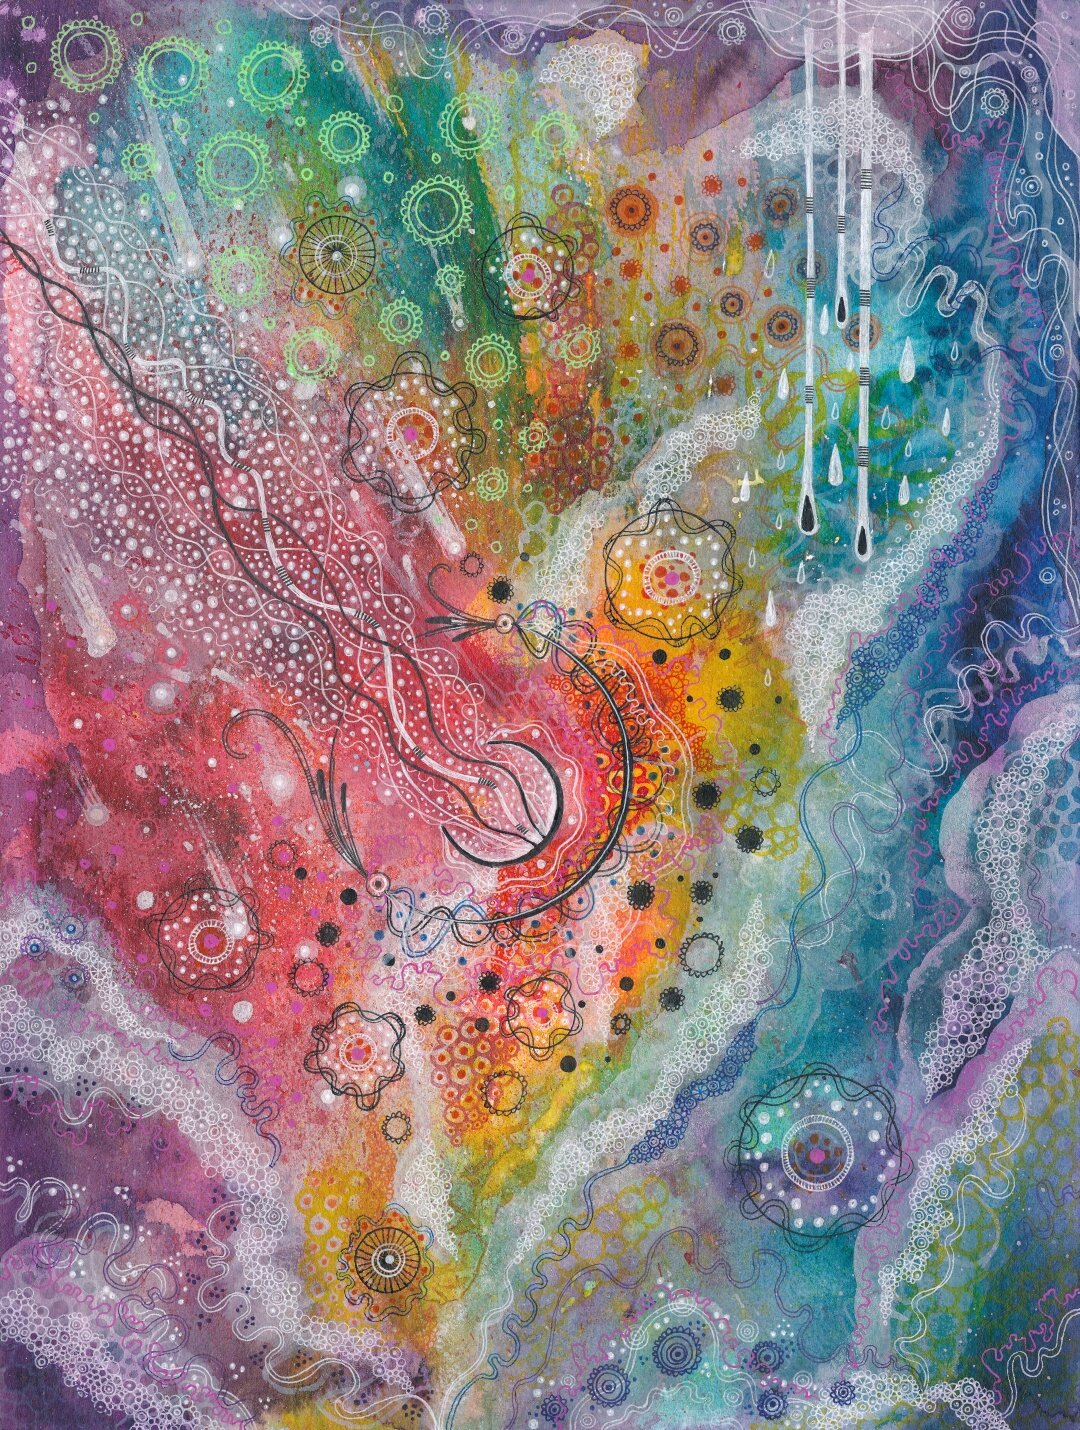 Cosmic jelly fish, 2015.